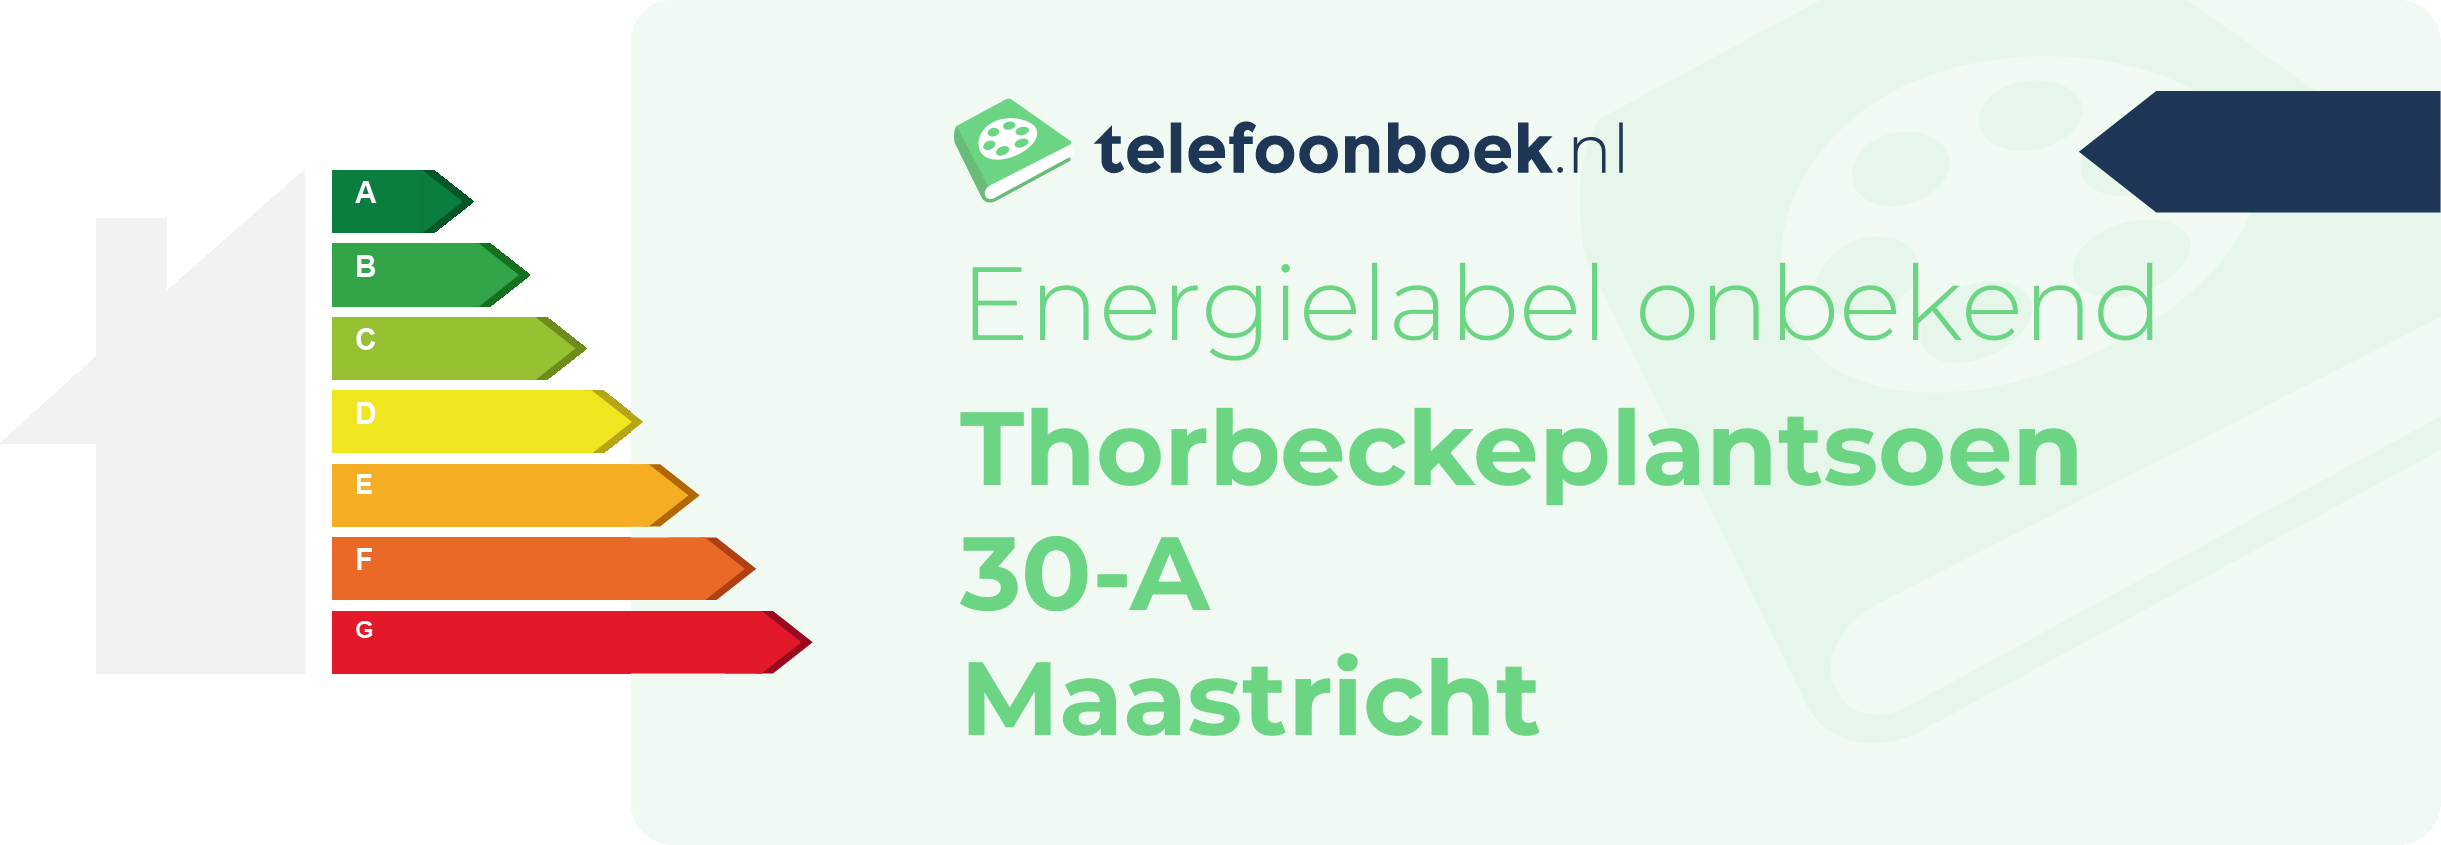 Energielabel Thorbeckeplantsoen 30-A Maastricht